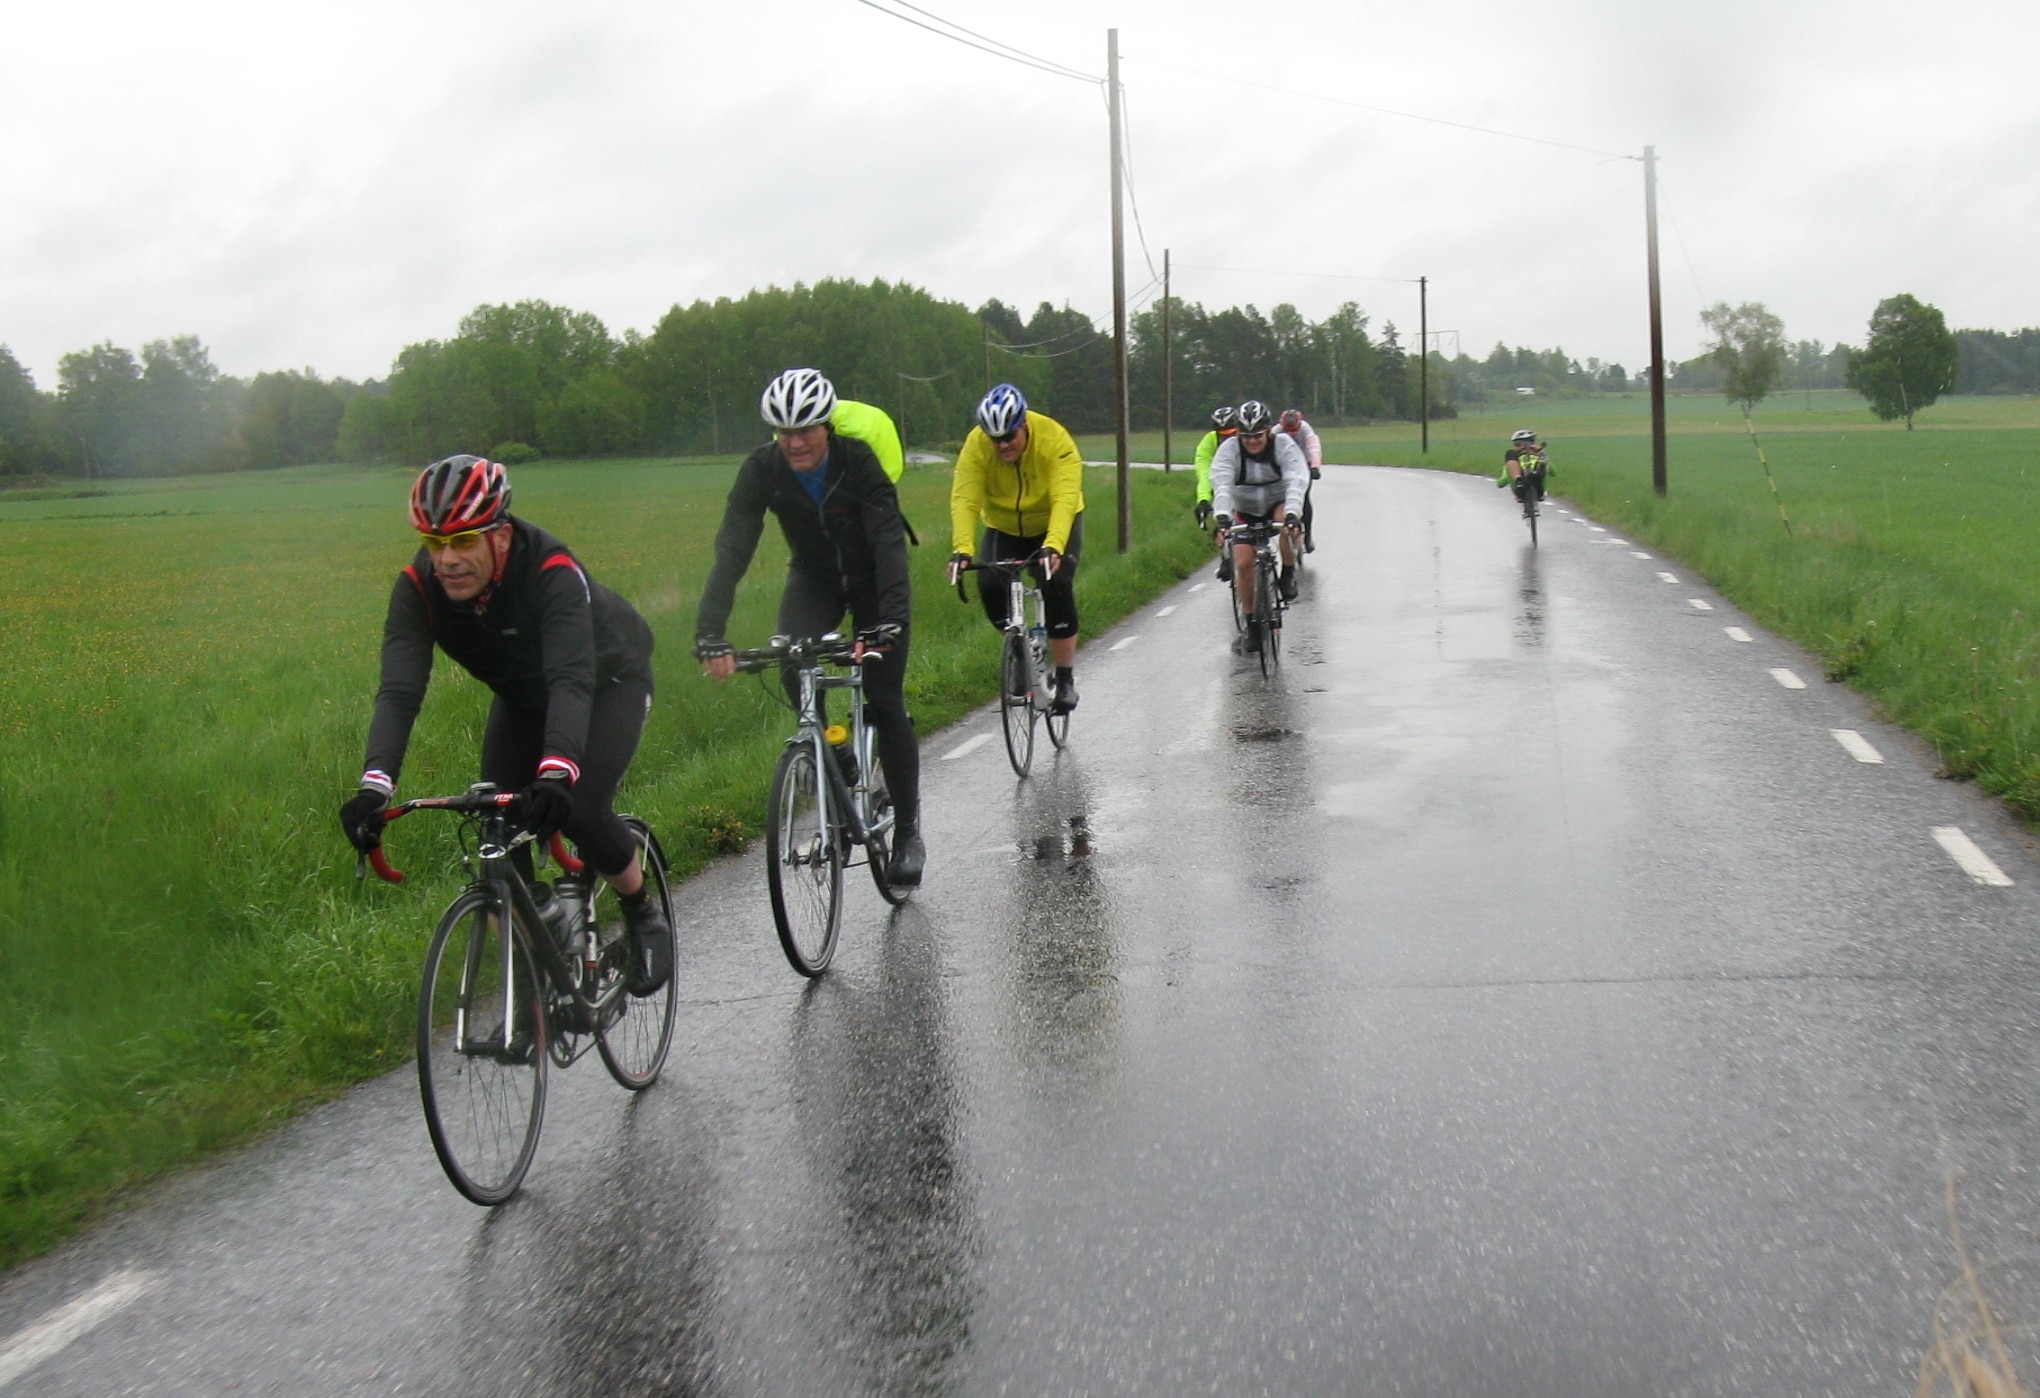 Cycling in rain